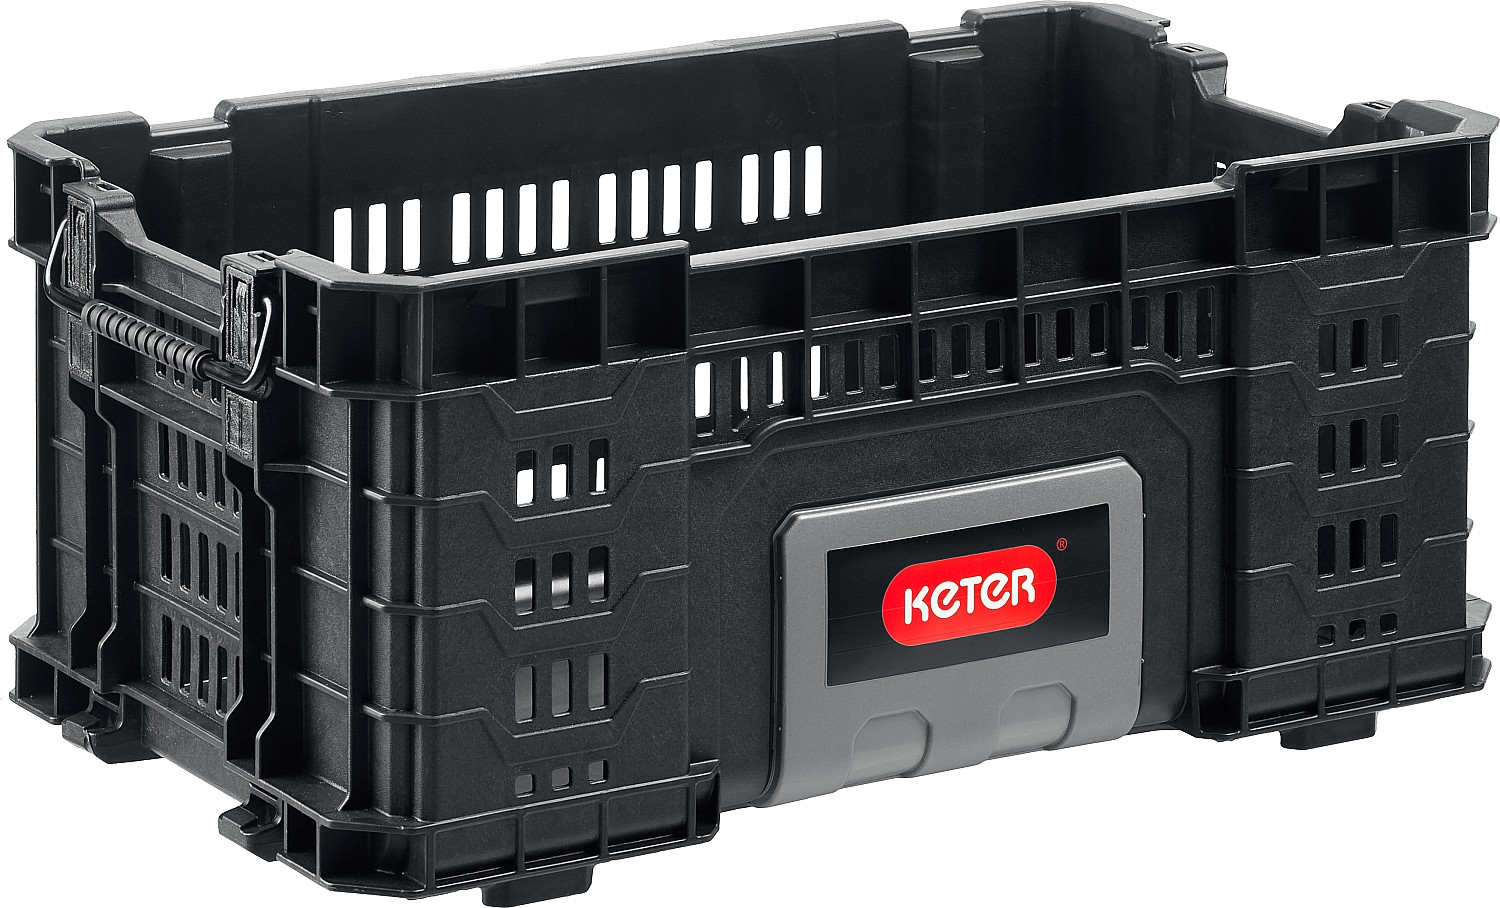 Keter tools. Ящик Keter Gear Crate. Ящик-лоток Keter Gear Crate 22 38373. Ящик-лоток Keter Gear Crate 22. Keter Gear Crate 22.